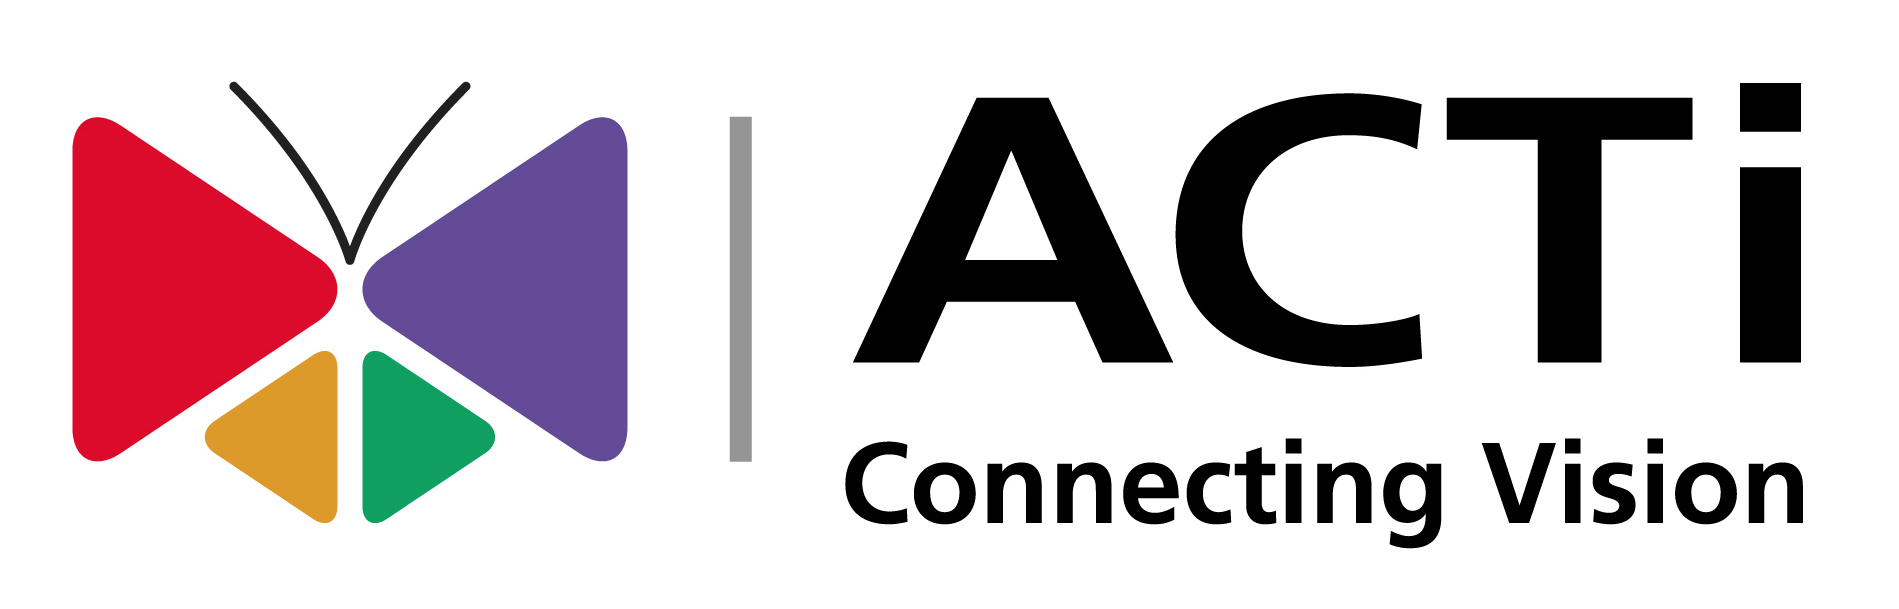 ACTi E43 - Kamery zintegrowane IP